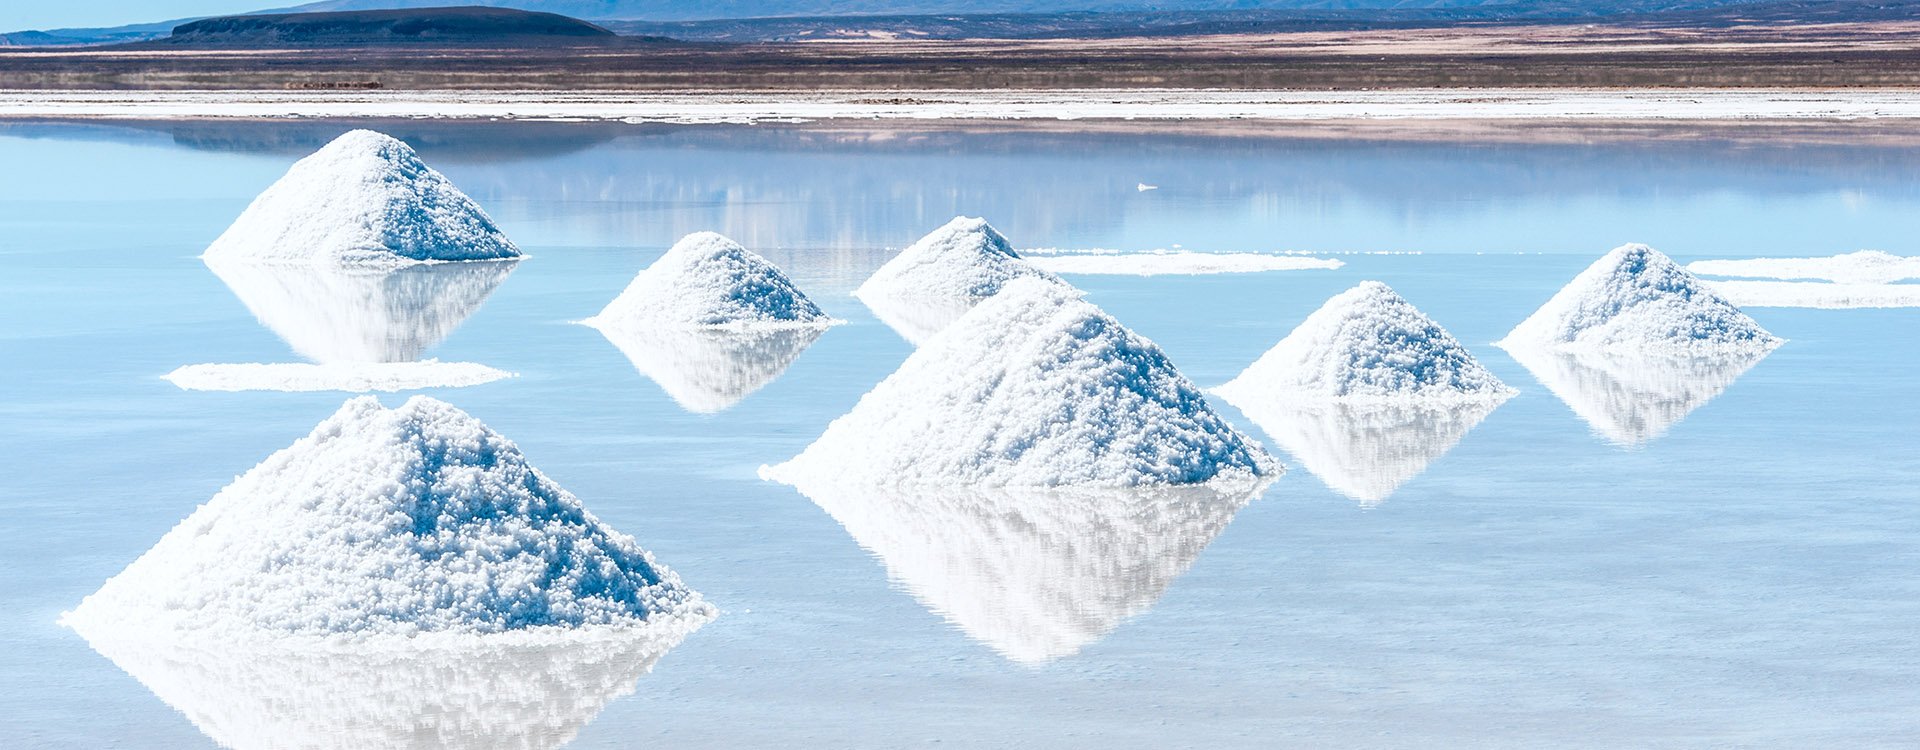 Salt lake and salt piles in salt flats Uyuni in Bolivia